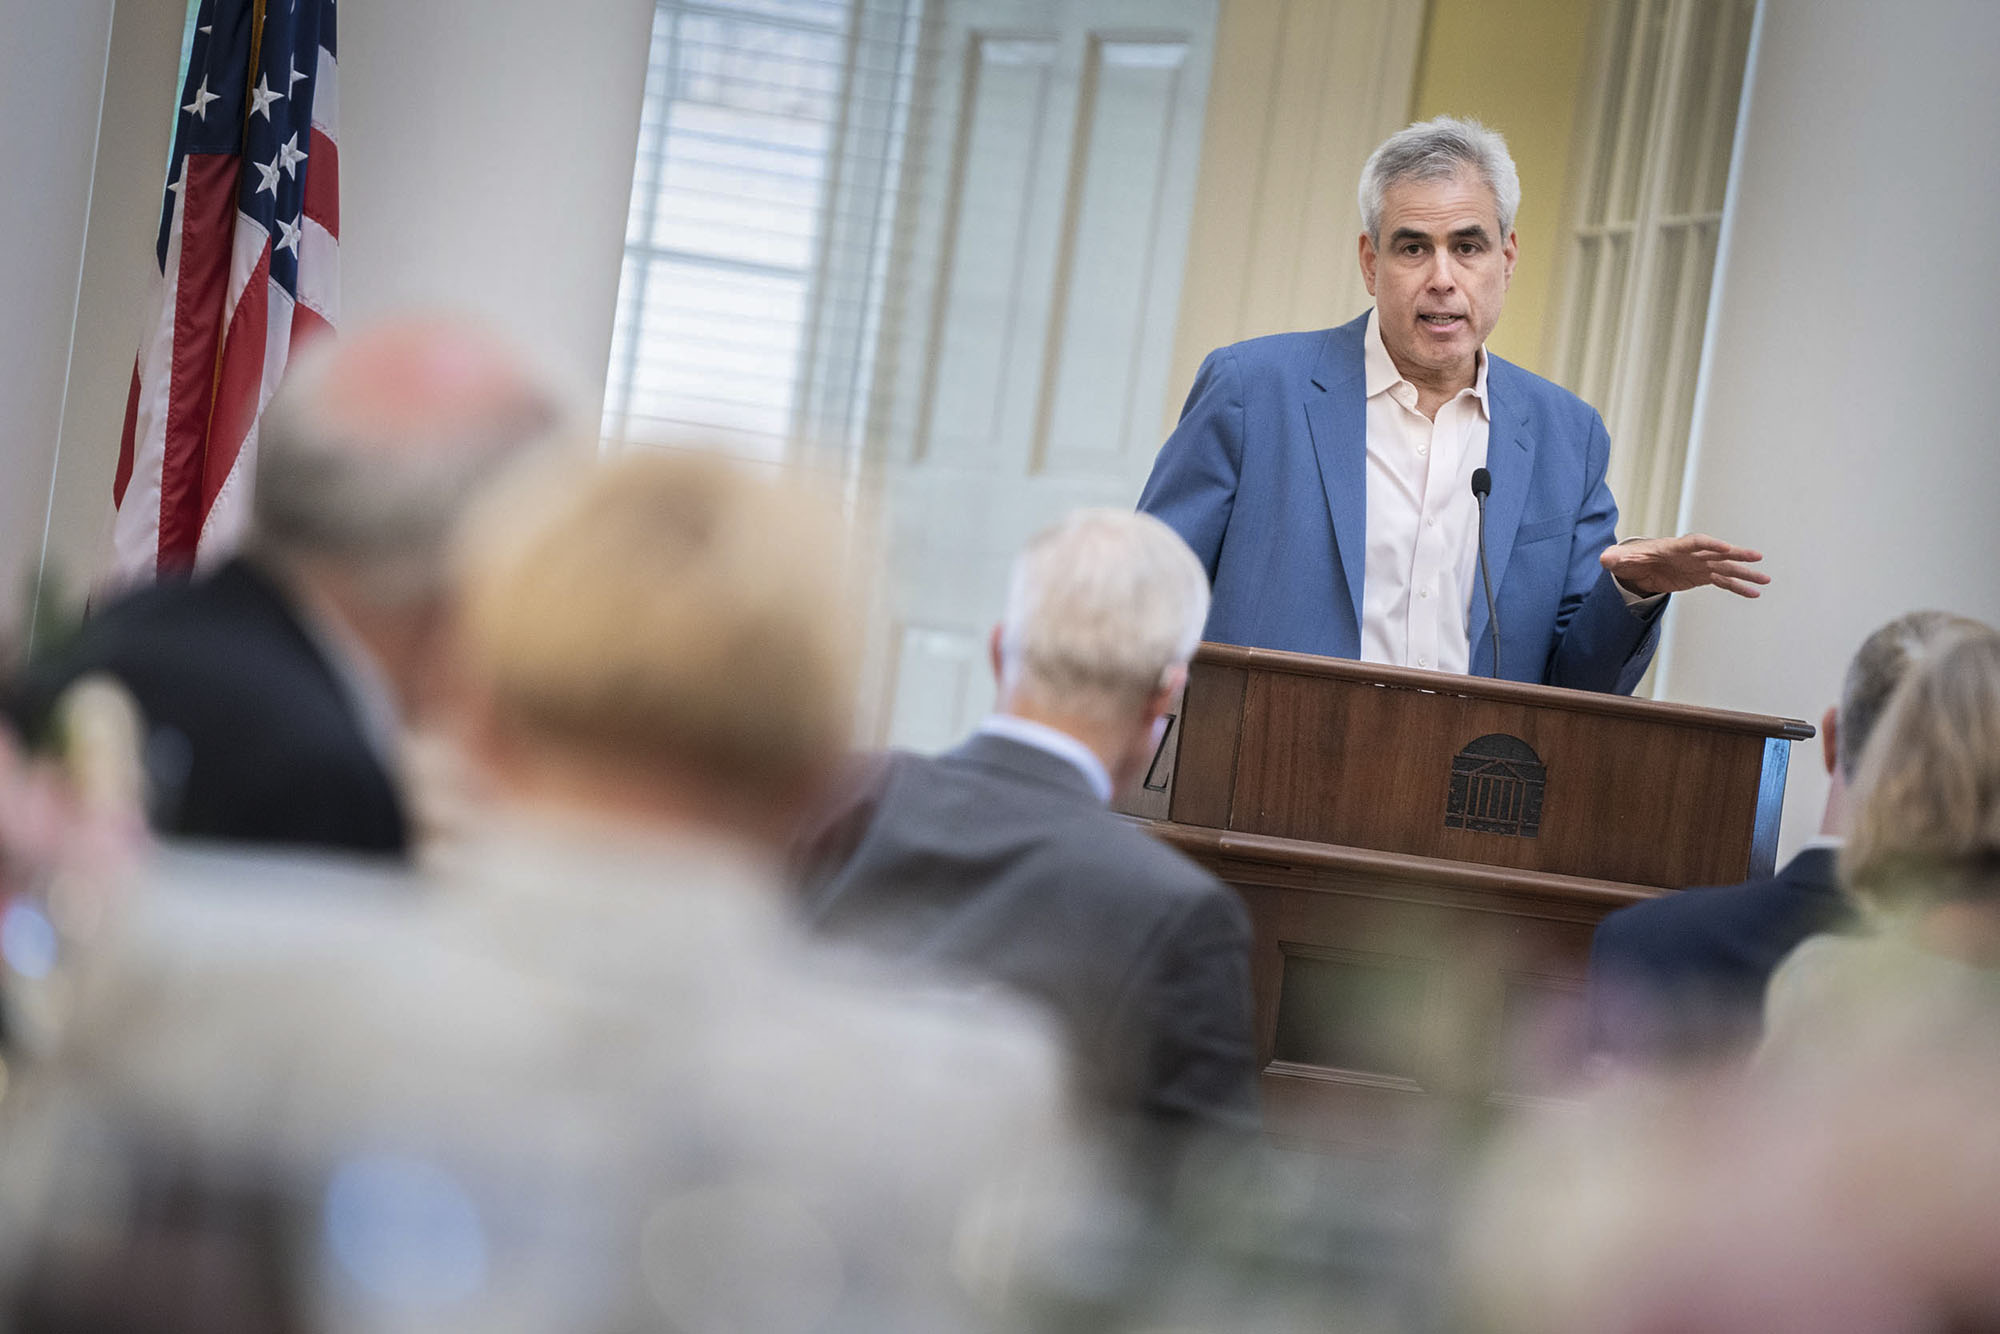 Jonathan Haidt stands at a podium giving a speech